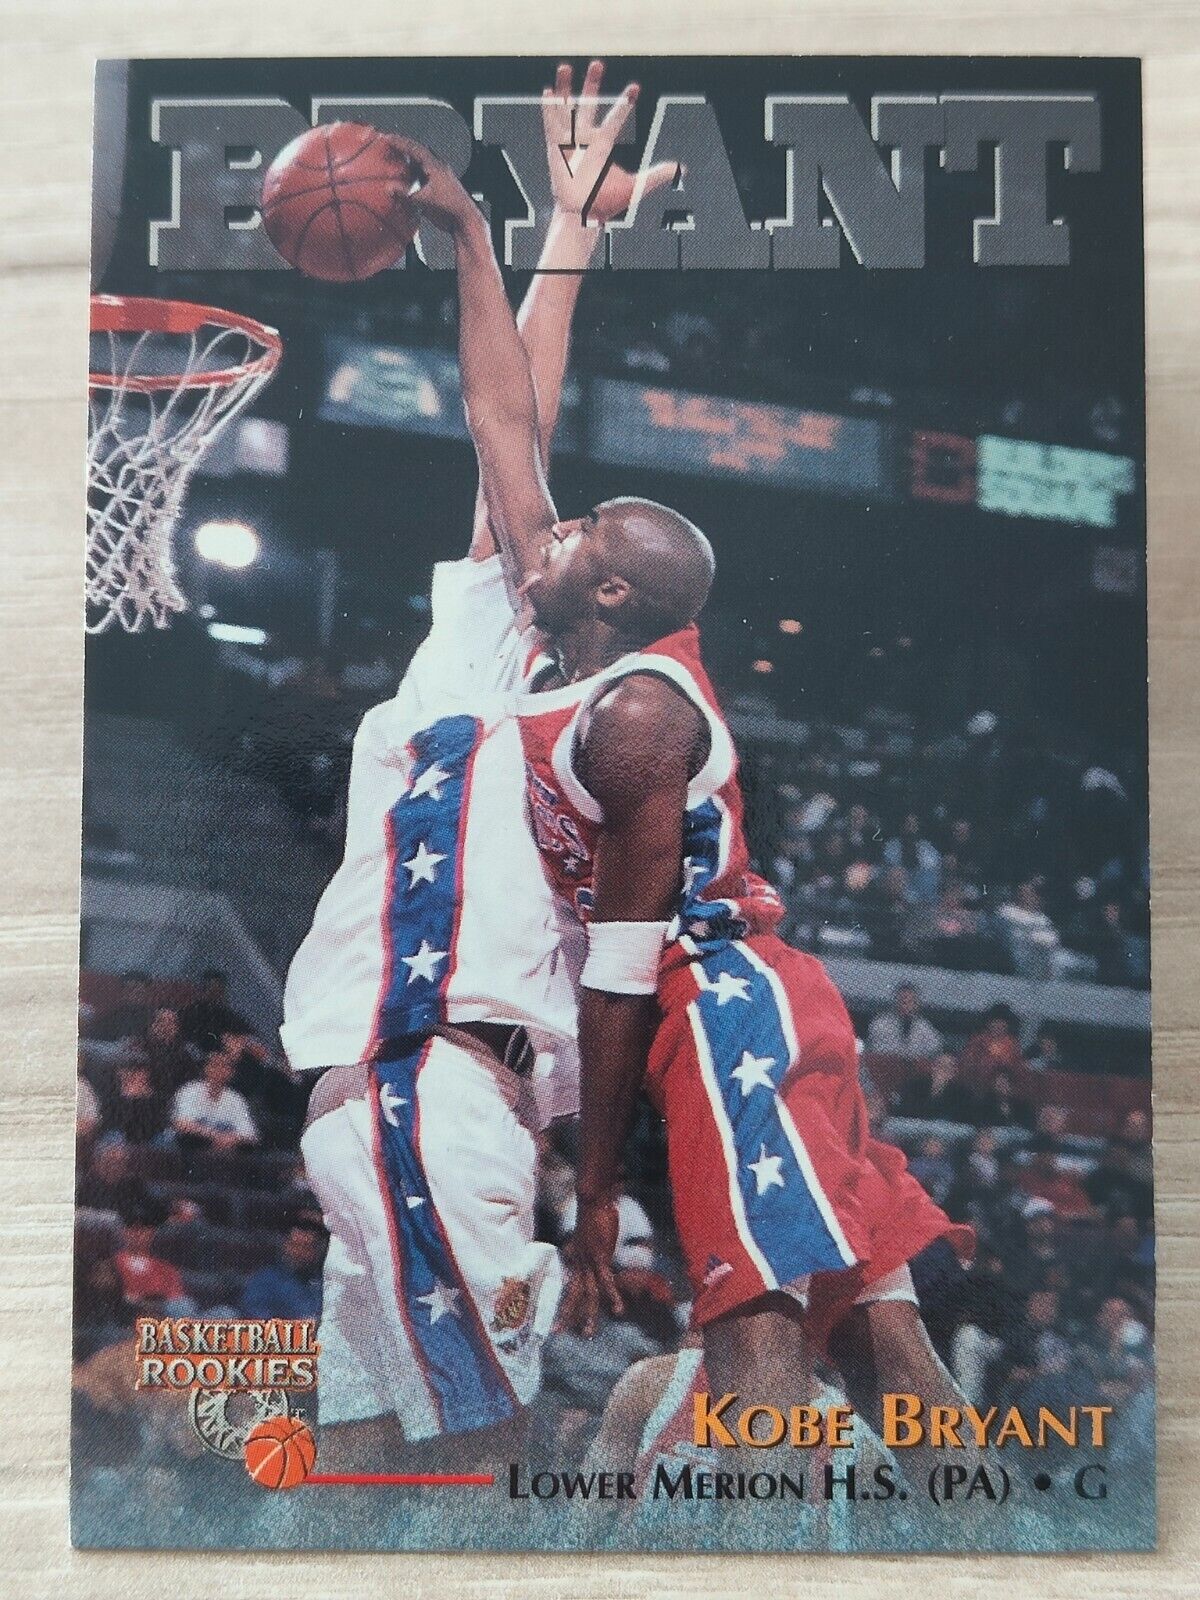 1996-97 N40 Score Board Car Basketball Rookies RC Kobe Bryant #15